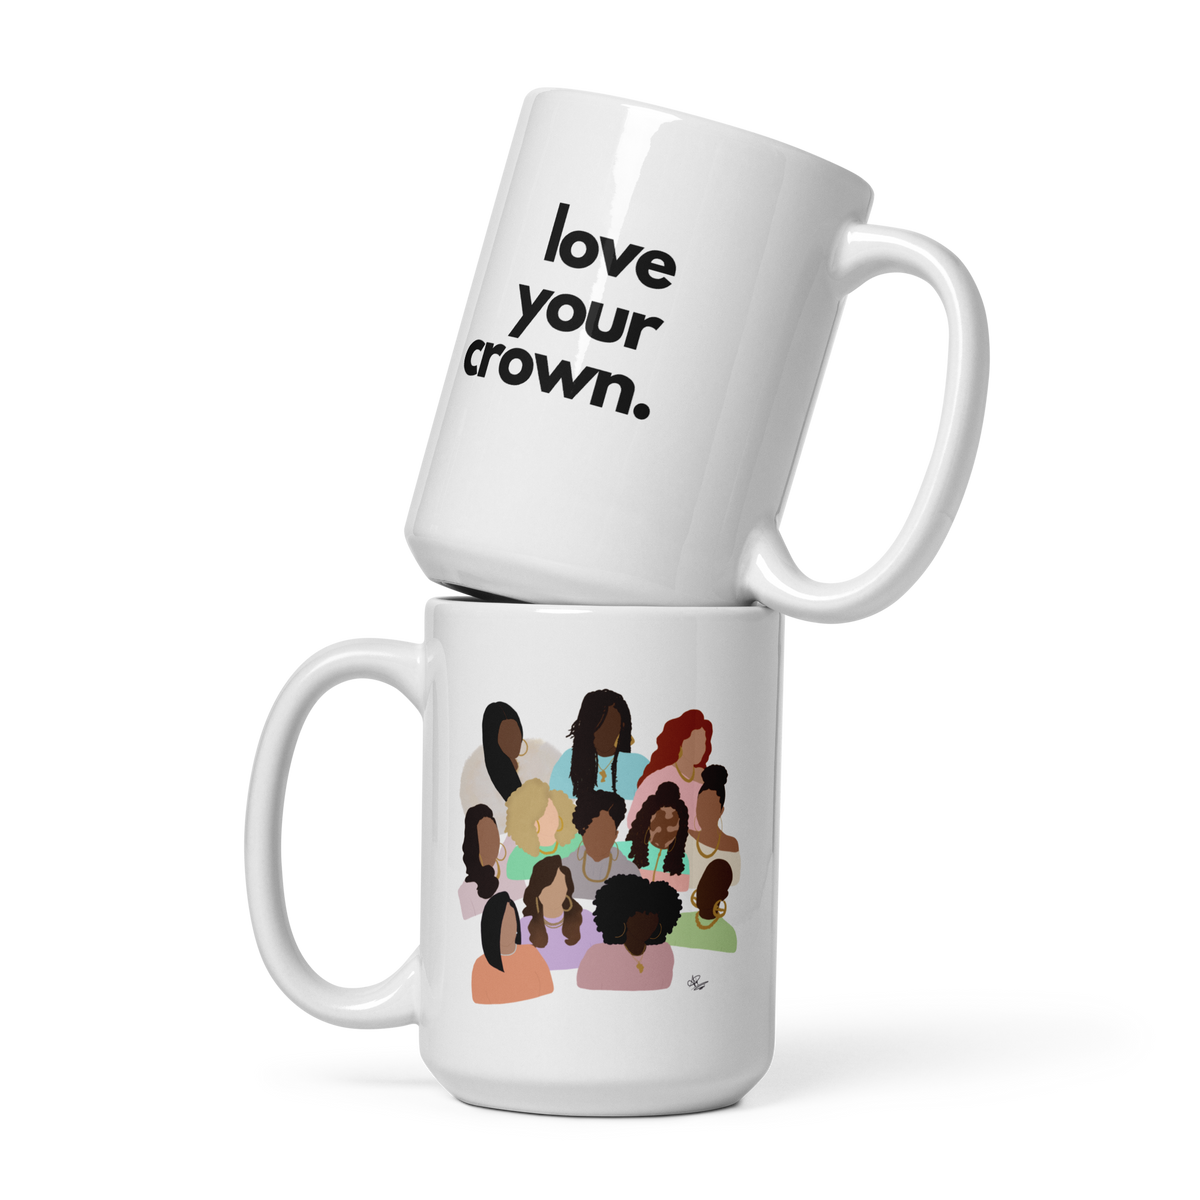 The Crew "Love Your Crown" Mug